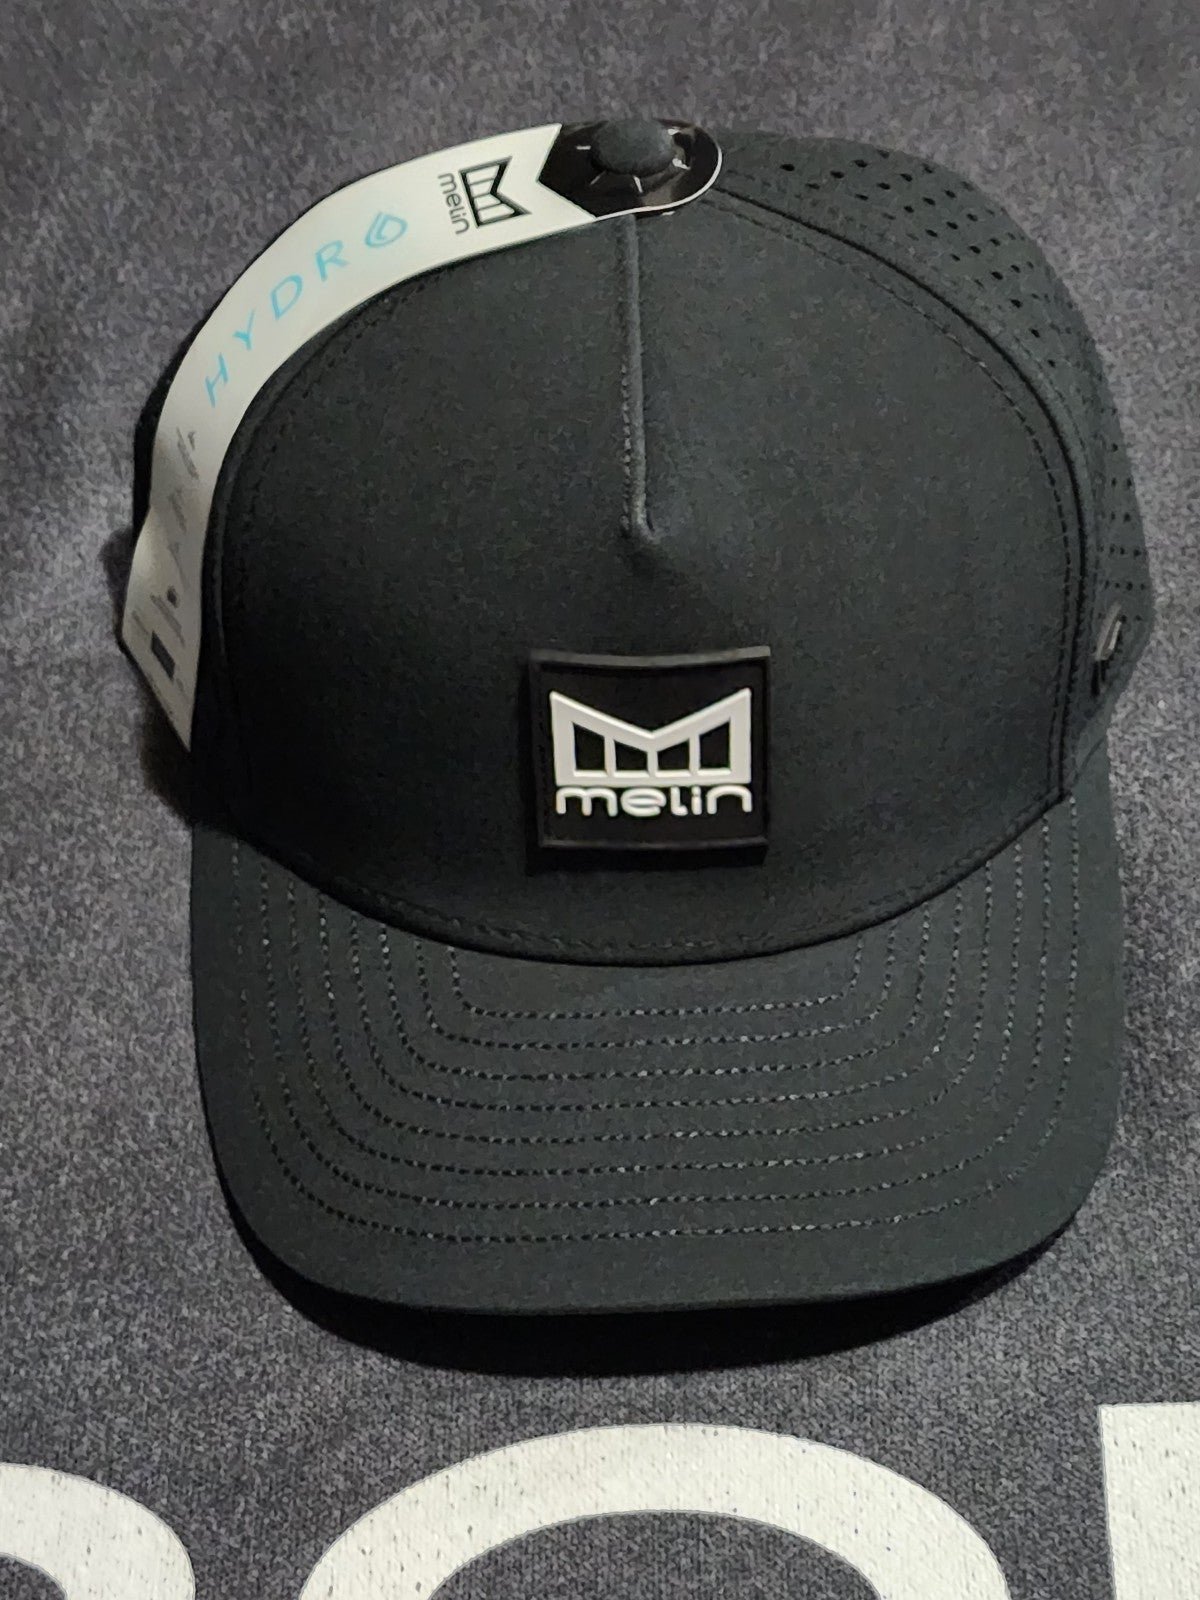 Melin Hydro Odyssey Stacked Black Classic Fit Hat Cziufa8wC